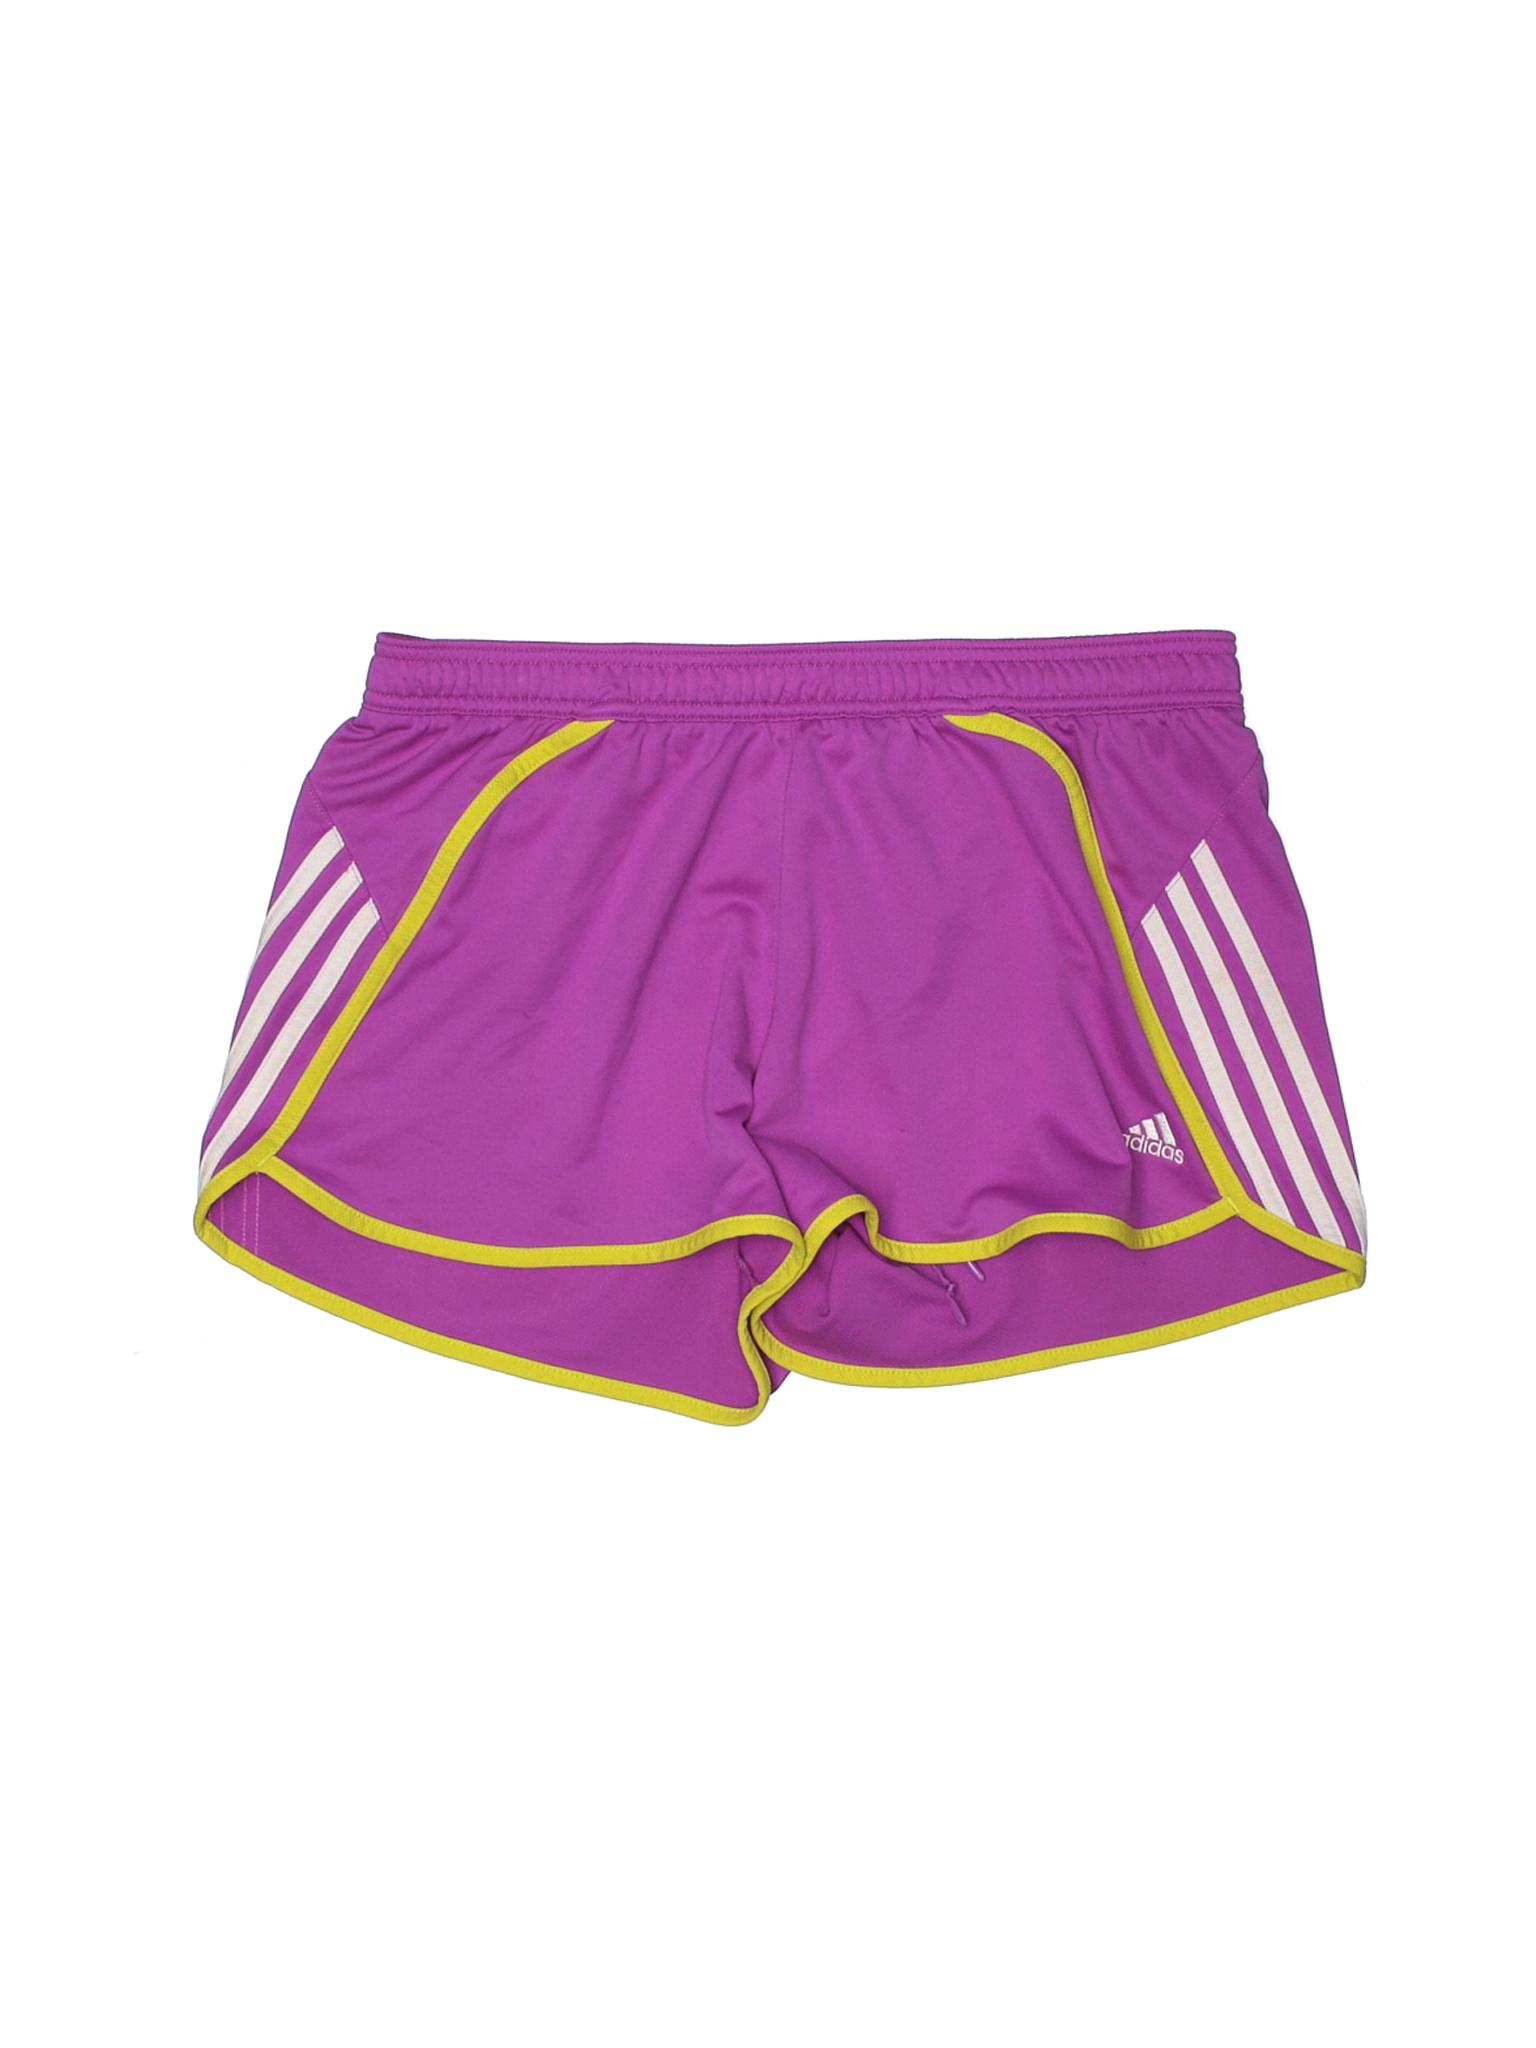 Adidas Women Purple Athletic Shorts L | eBay